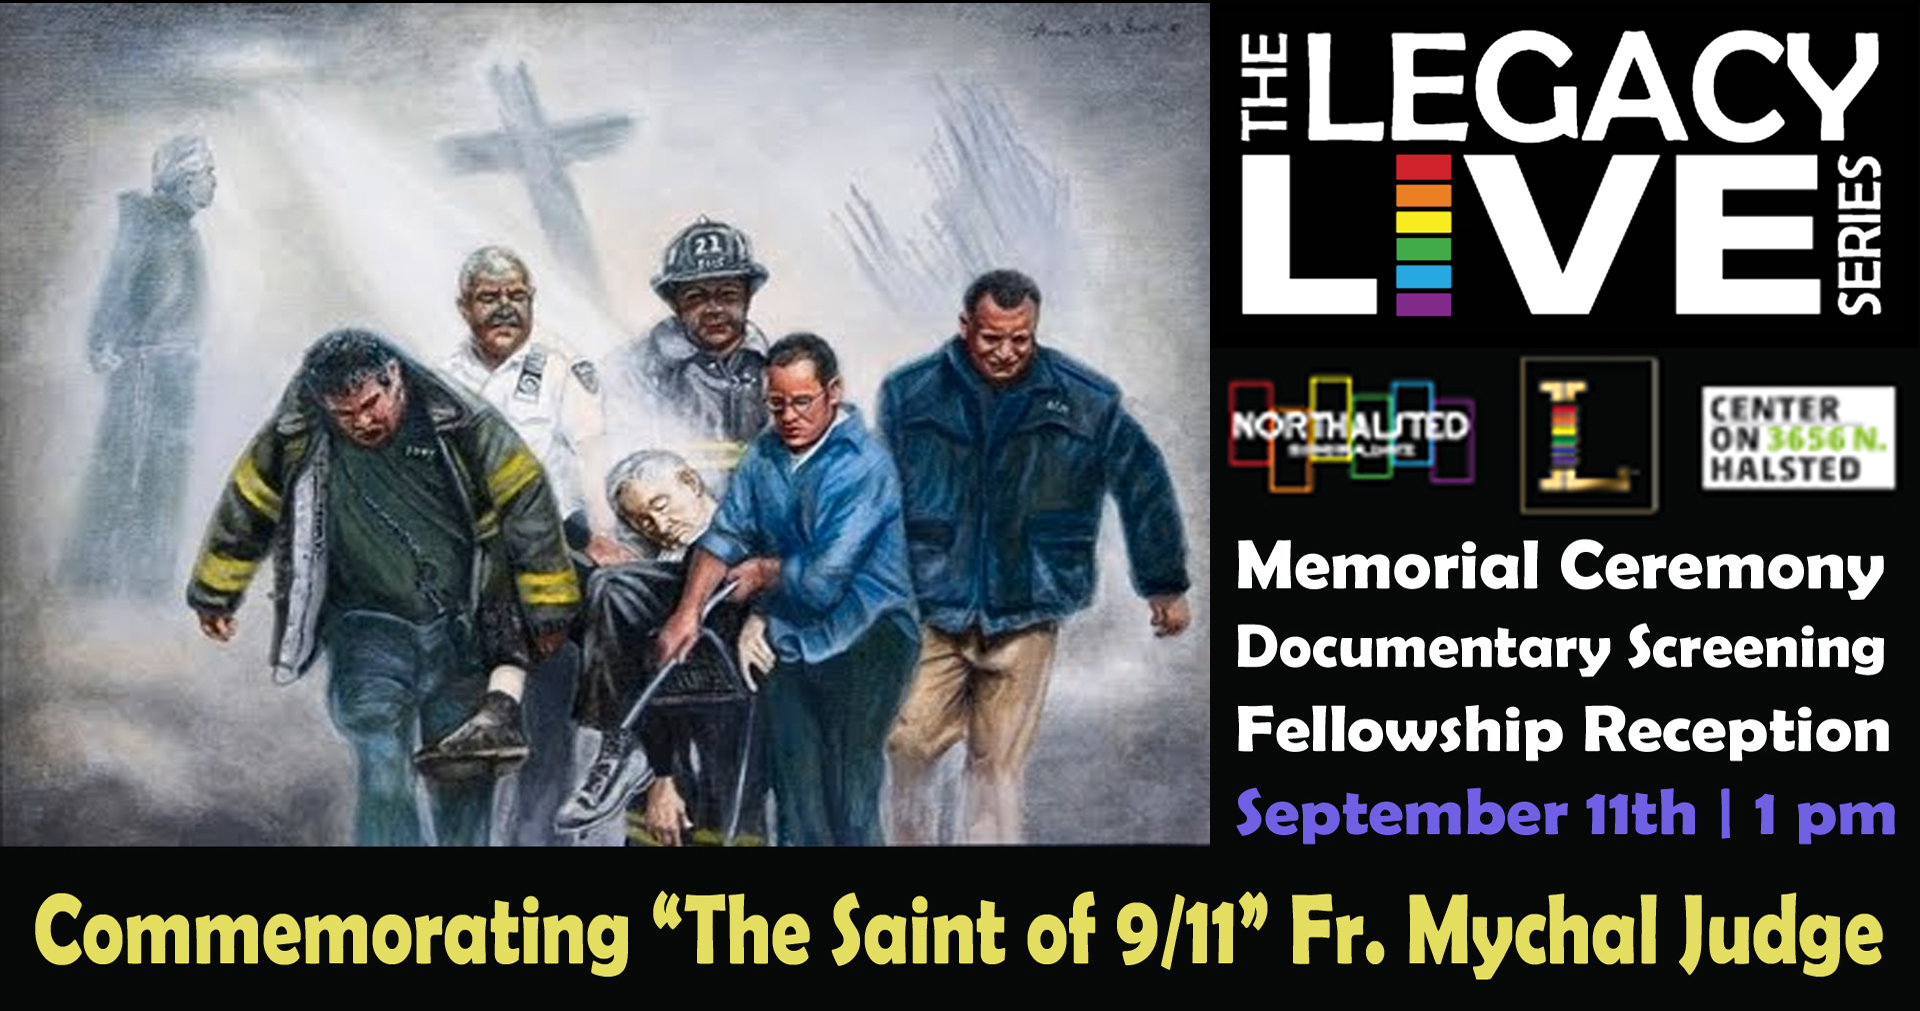 LEGACY LIVE Fr. Mychal Judge Commemorating The Saint of 9-11 2016